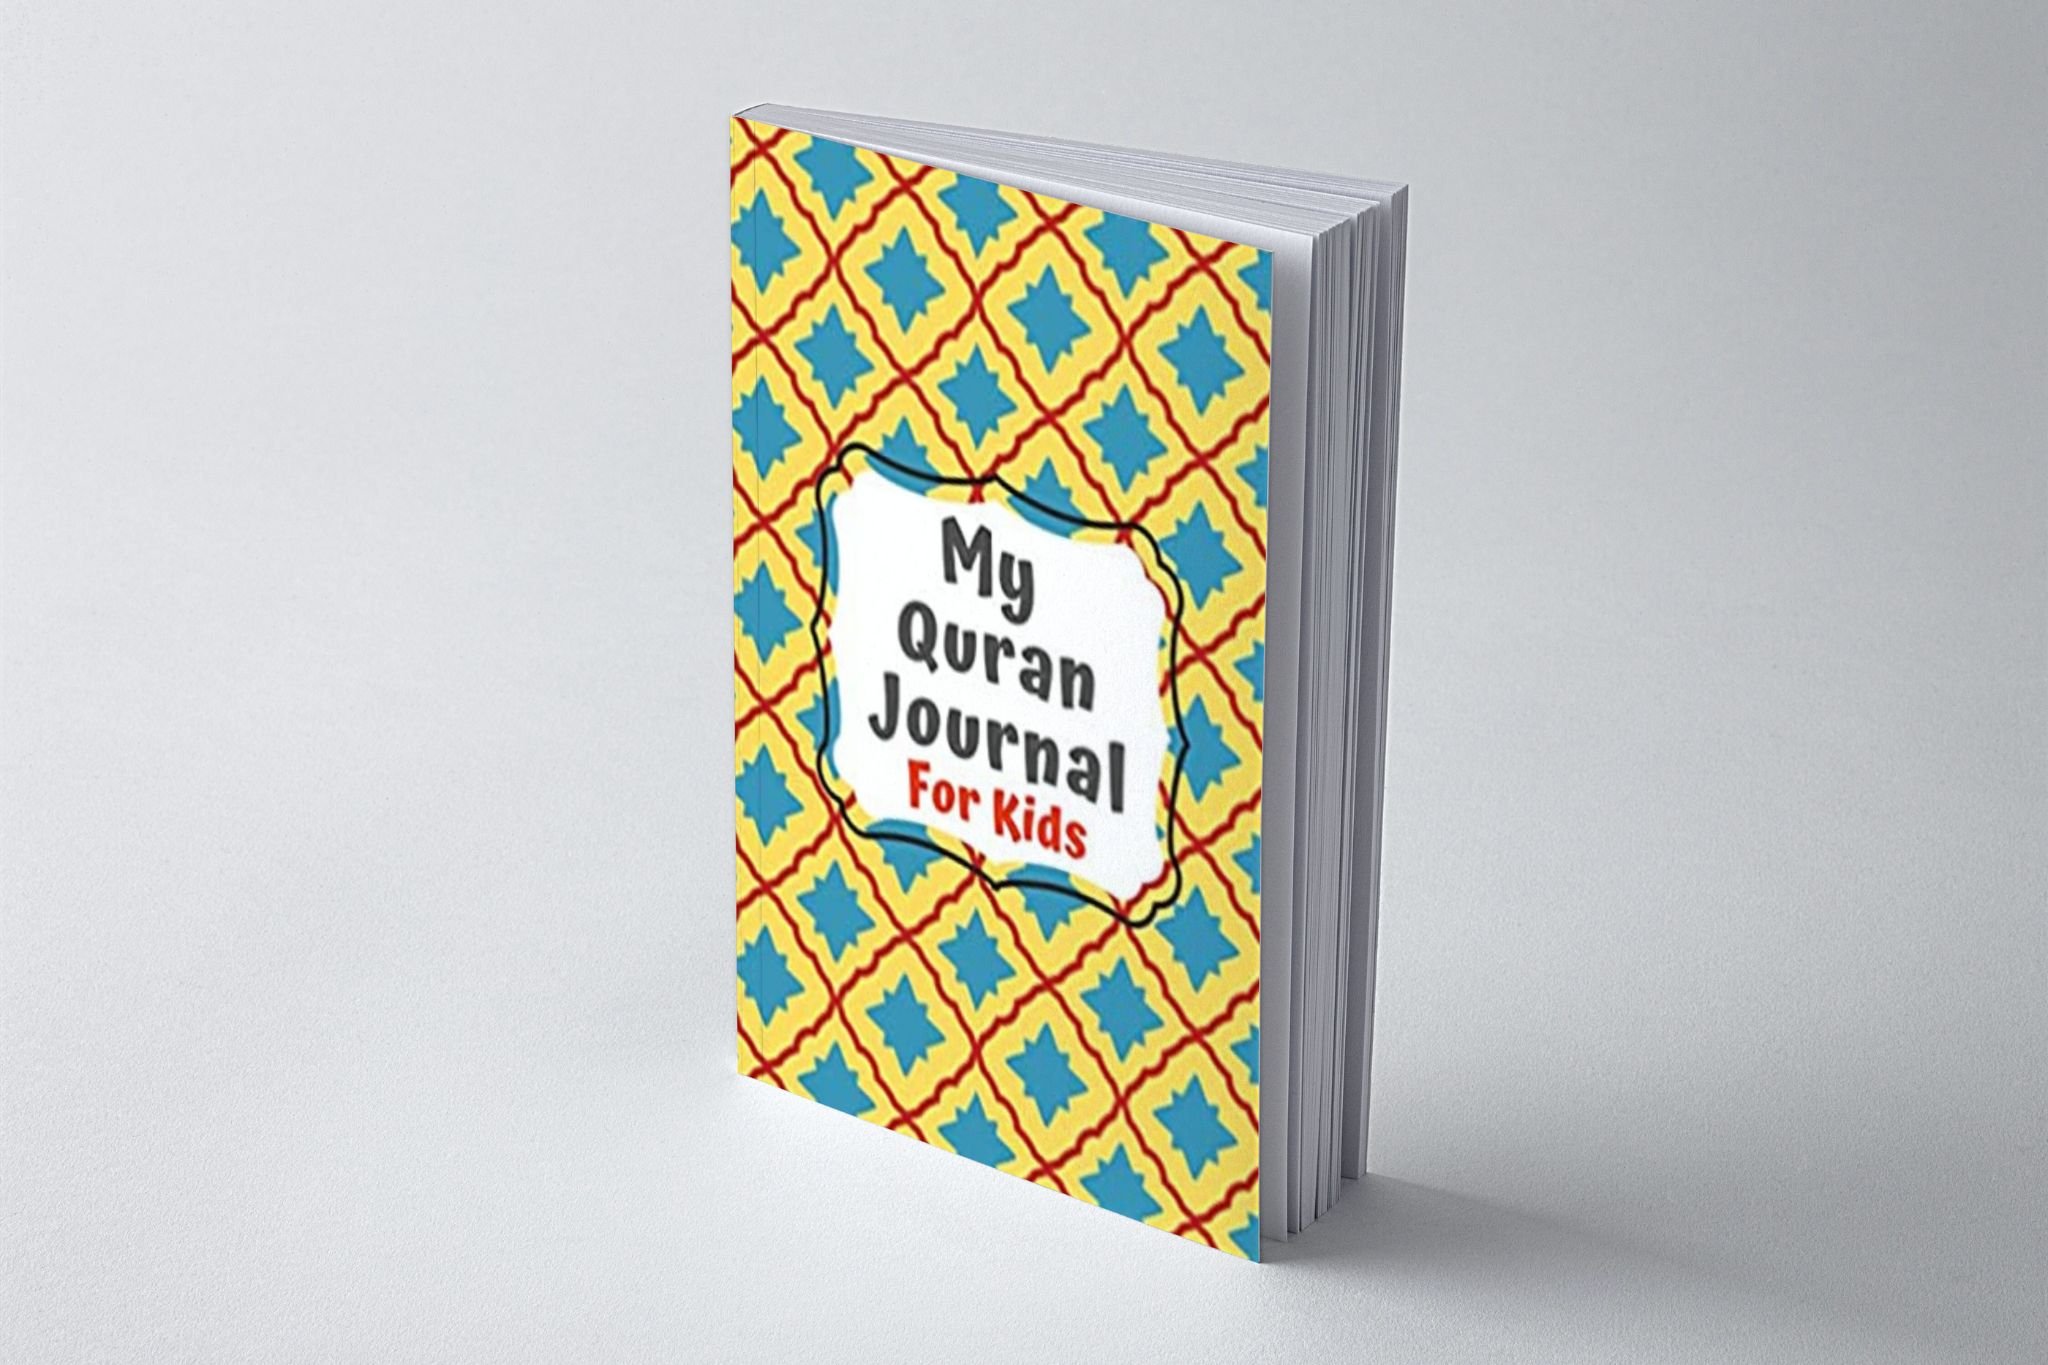 Quran Journal Cover.jpg